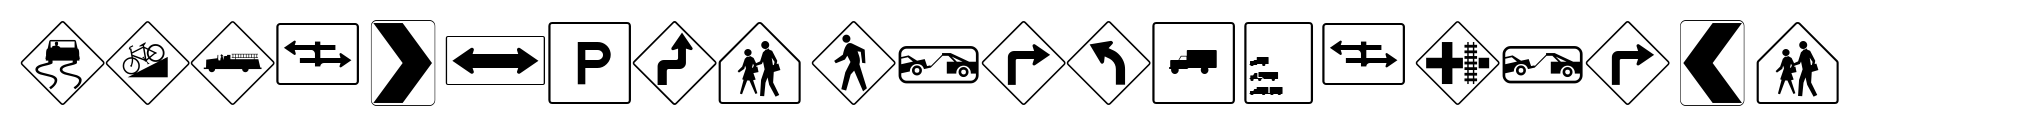 PIXymbols Highway Signs image